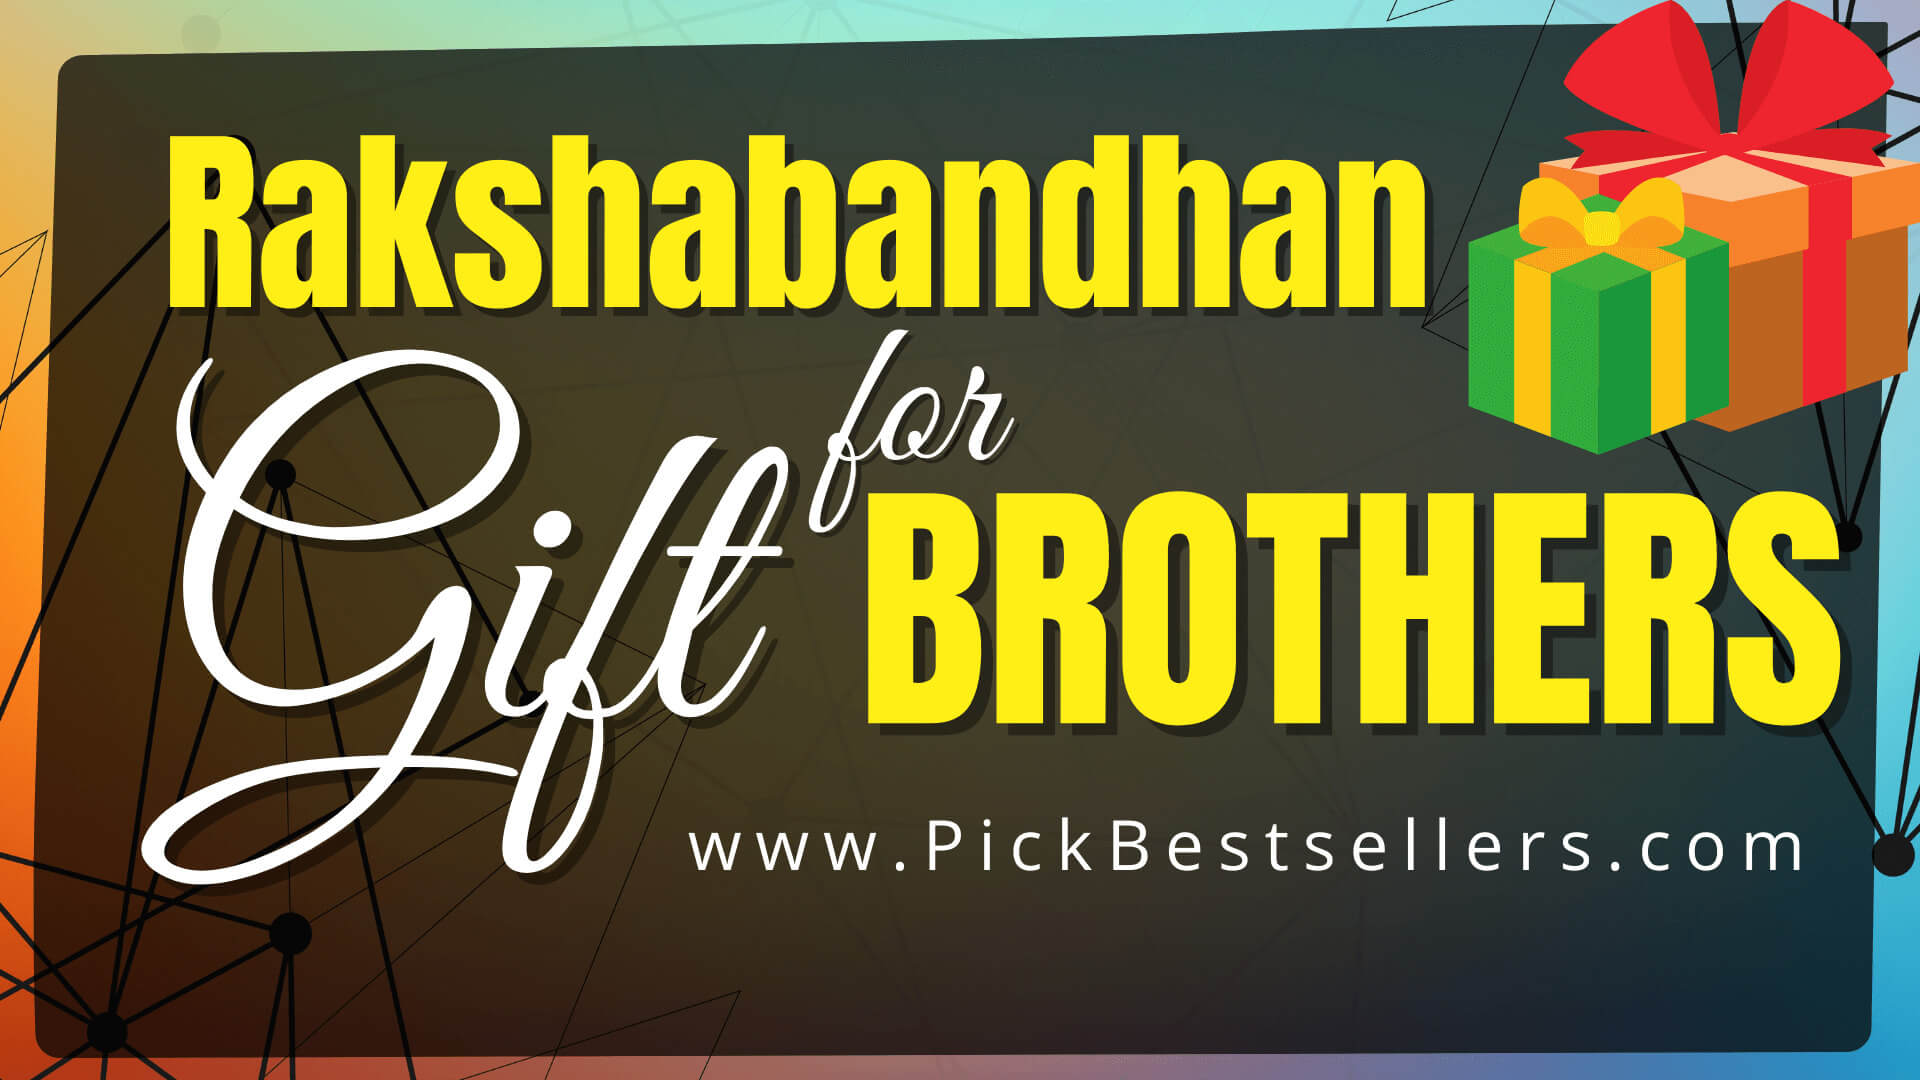 Rakshabandhan Gifts for Brothers